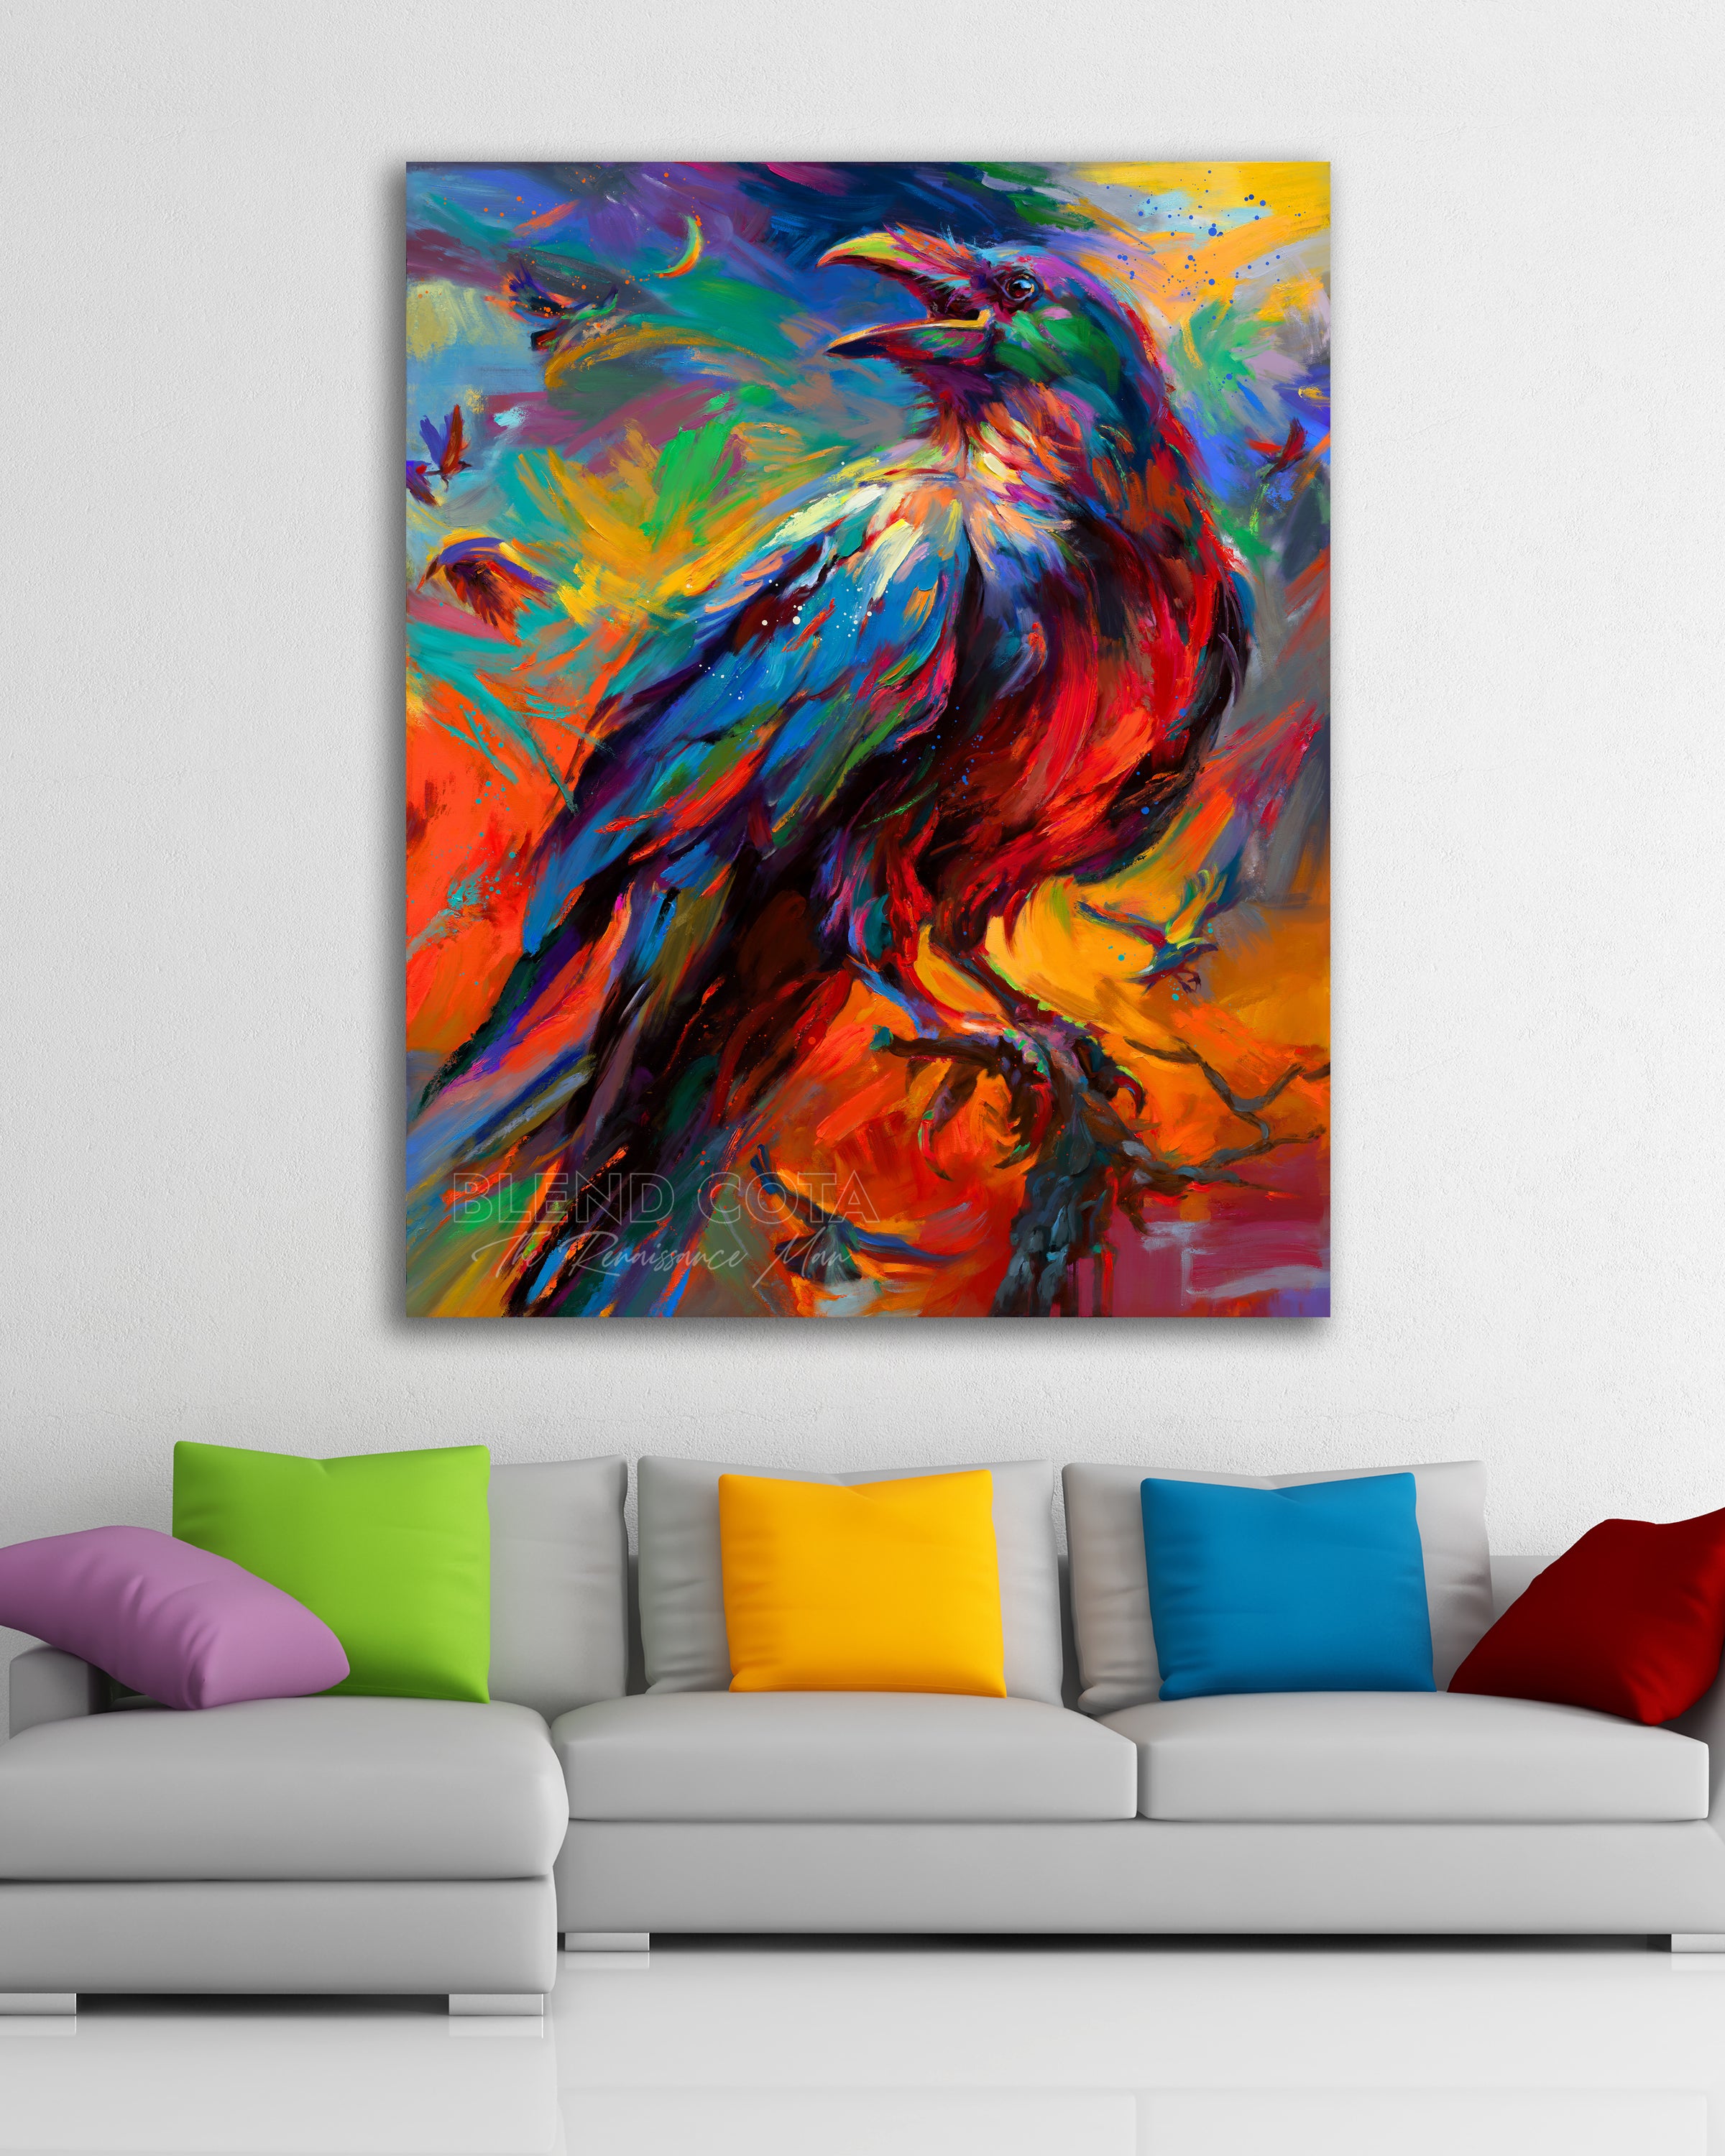 The Mystical Raven - Blend Cota Limited Edition Art on Canvas - Blend Cota Studios 